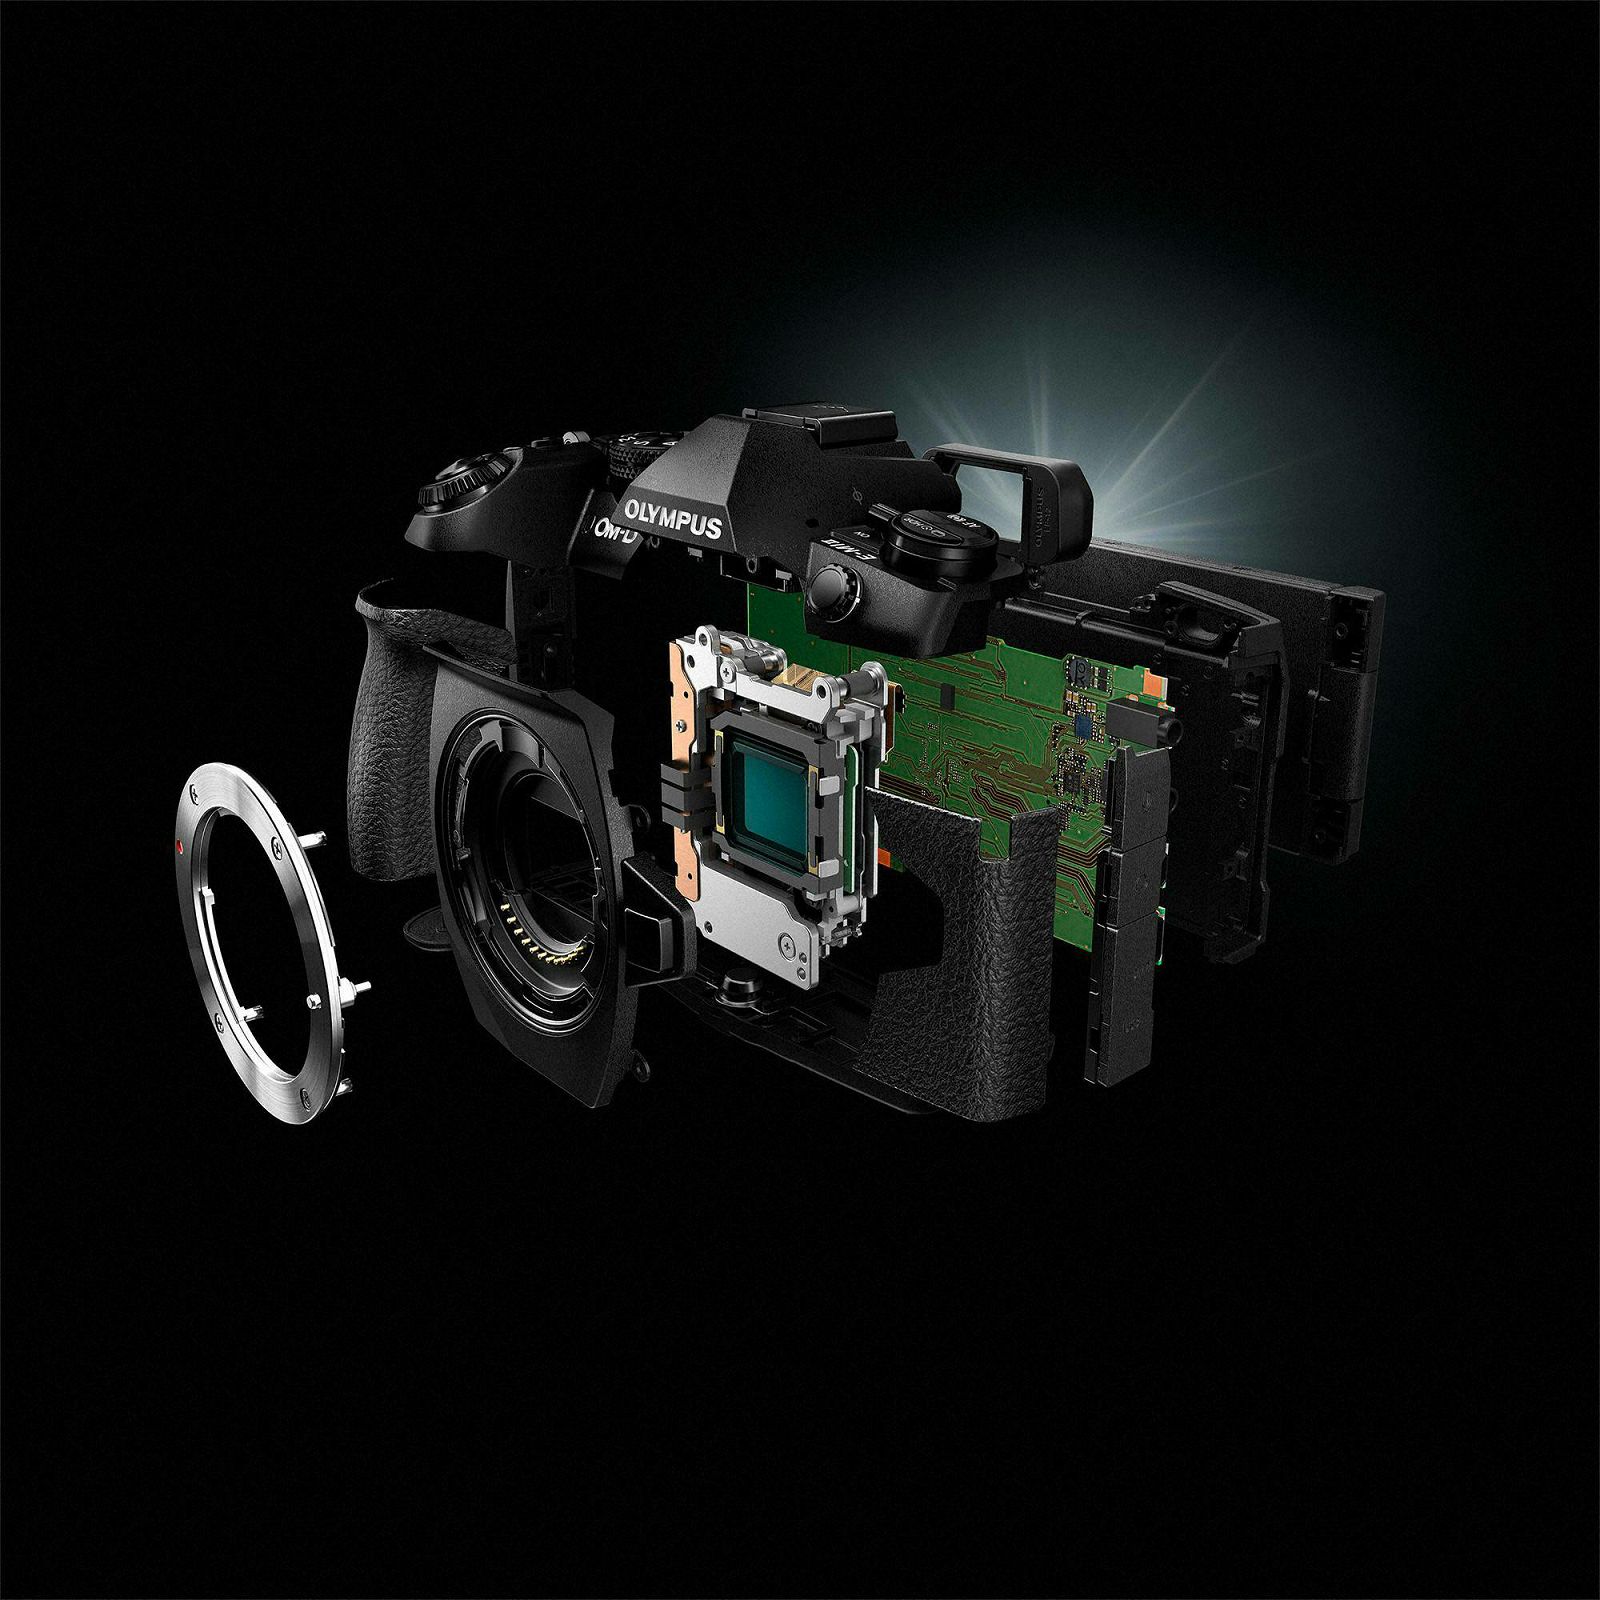 Olympus E-M1 II + 12-200mm f/3.5-6.3 Black crni digitalni fotoaparat s objektivom EZ-M1220 E-M1II Mirrorless MFT Micro Four Thirds Digital Camera (V207062BE00)